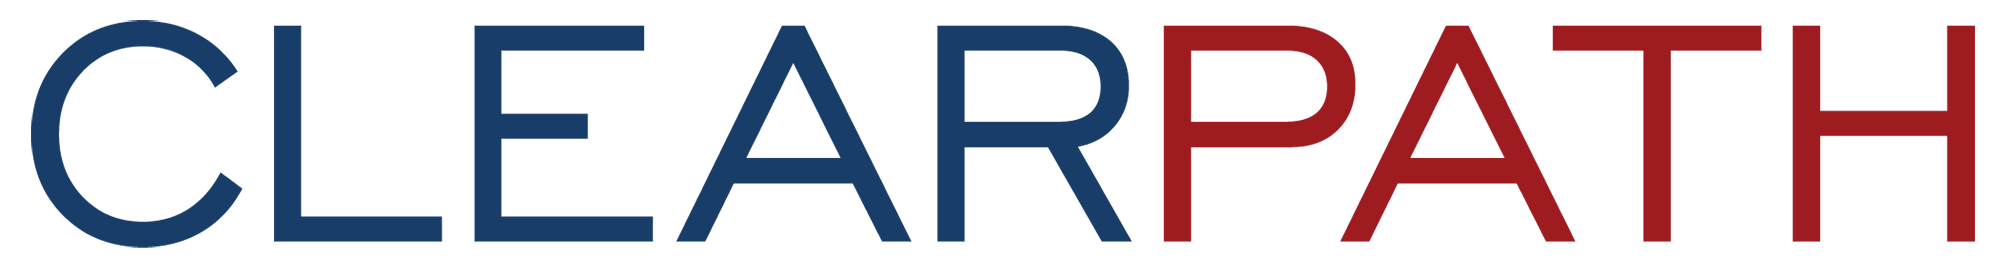 ClearPath logo